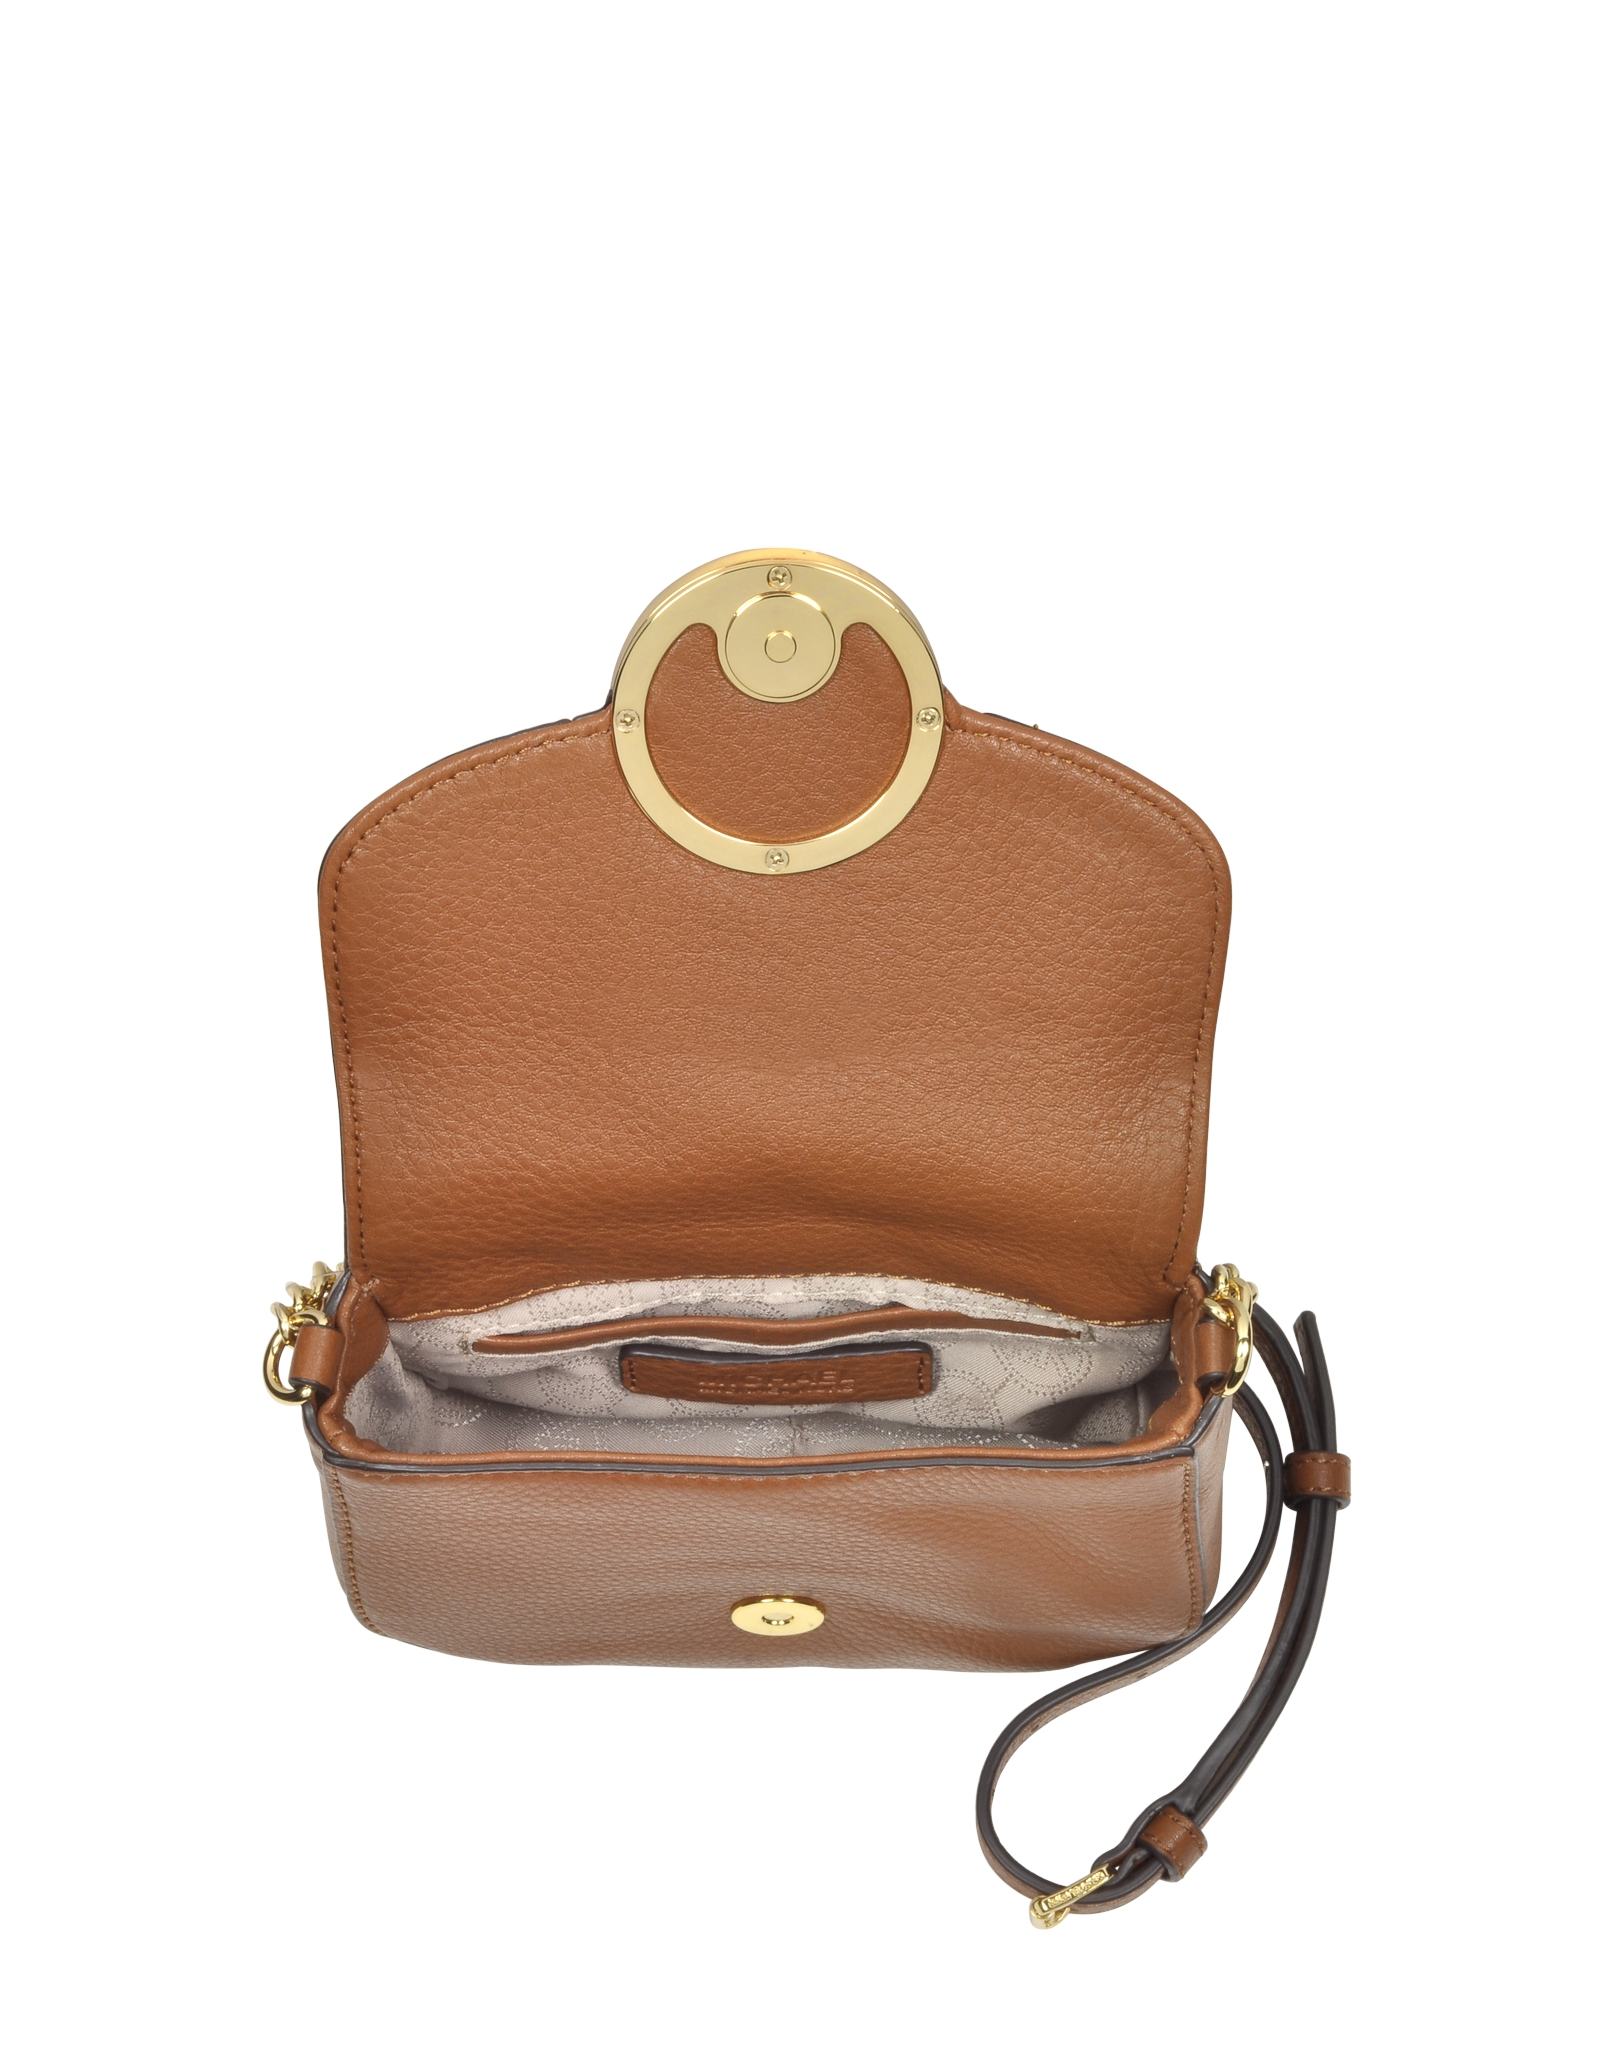 Lyst - Michael Kors Fulton Luggage Leather Small Crossbody Bag in Metallic